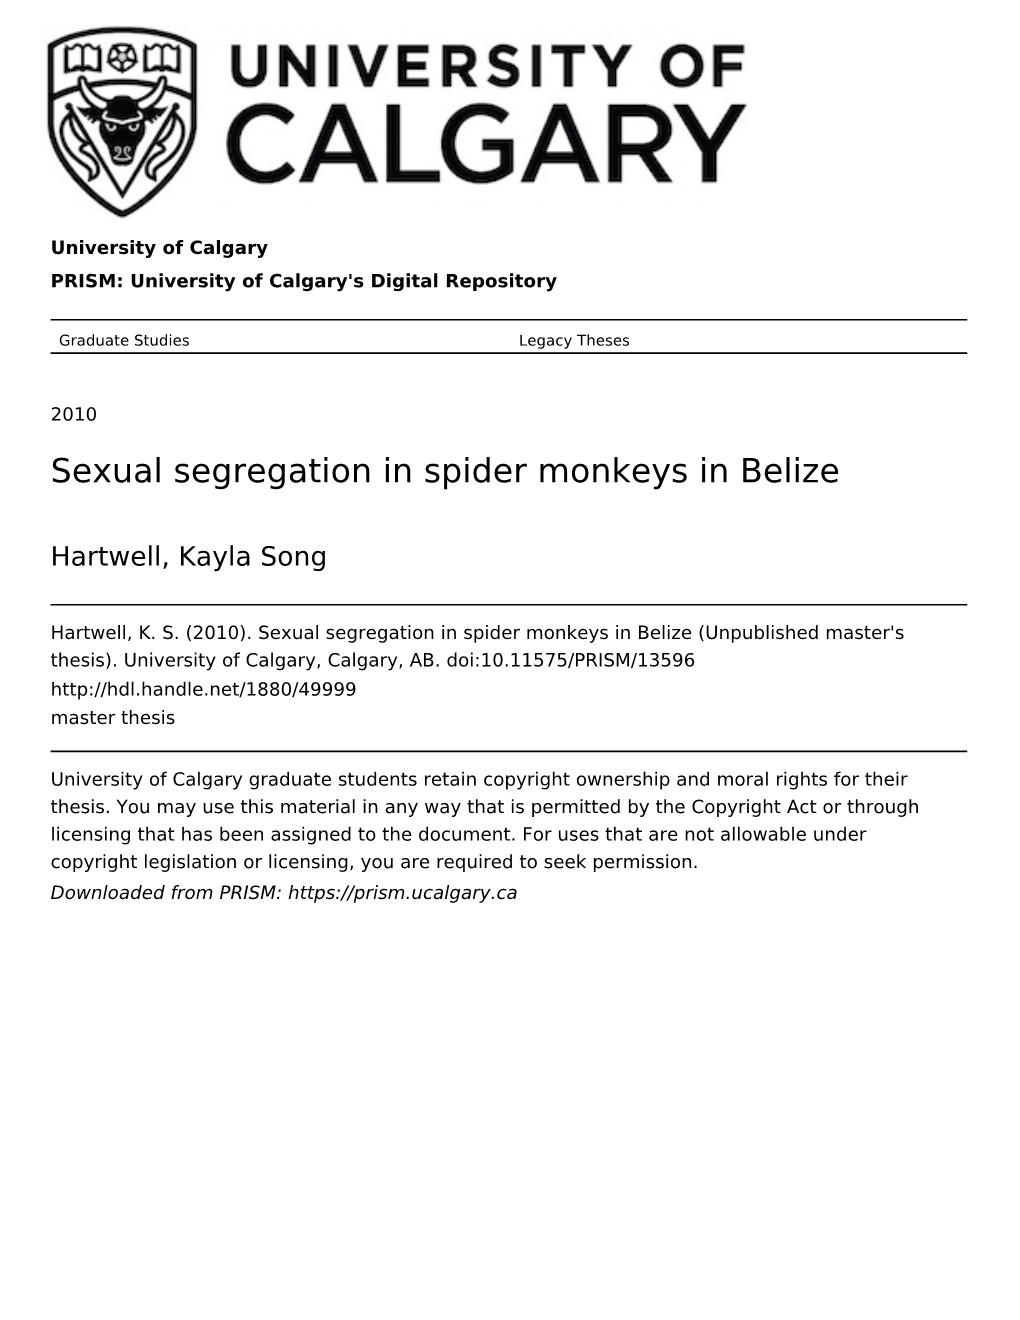 Sexual Segregation in Spider Monkeys in Belize